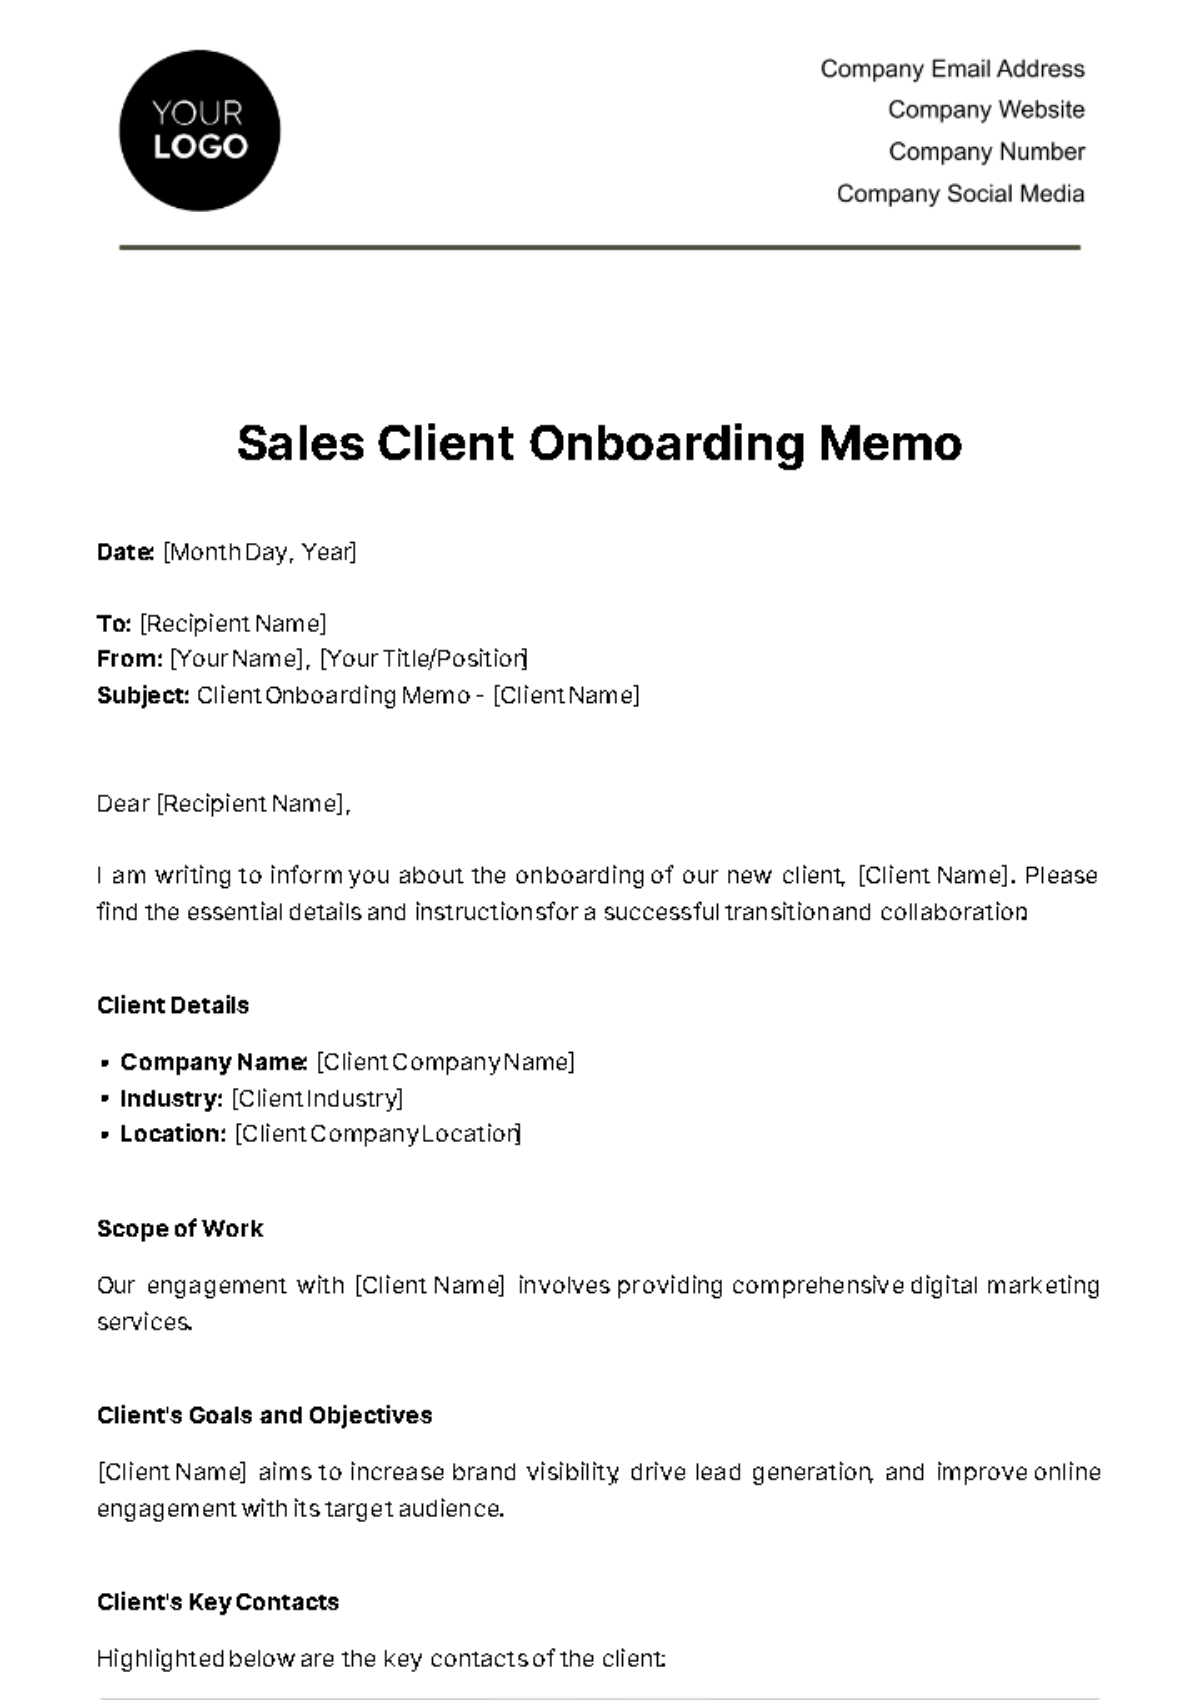 Sales Client Onboarding Memo Template